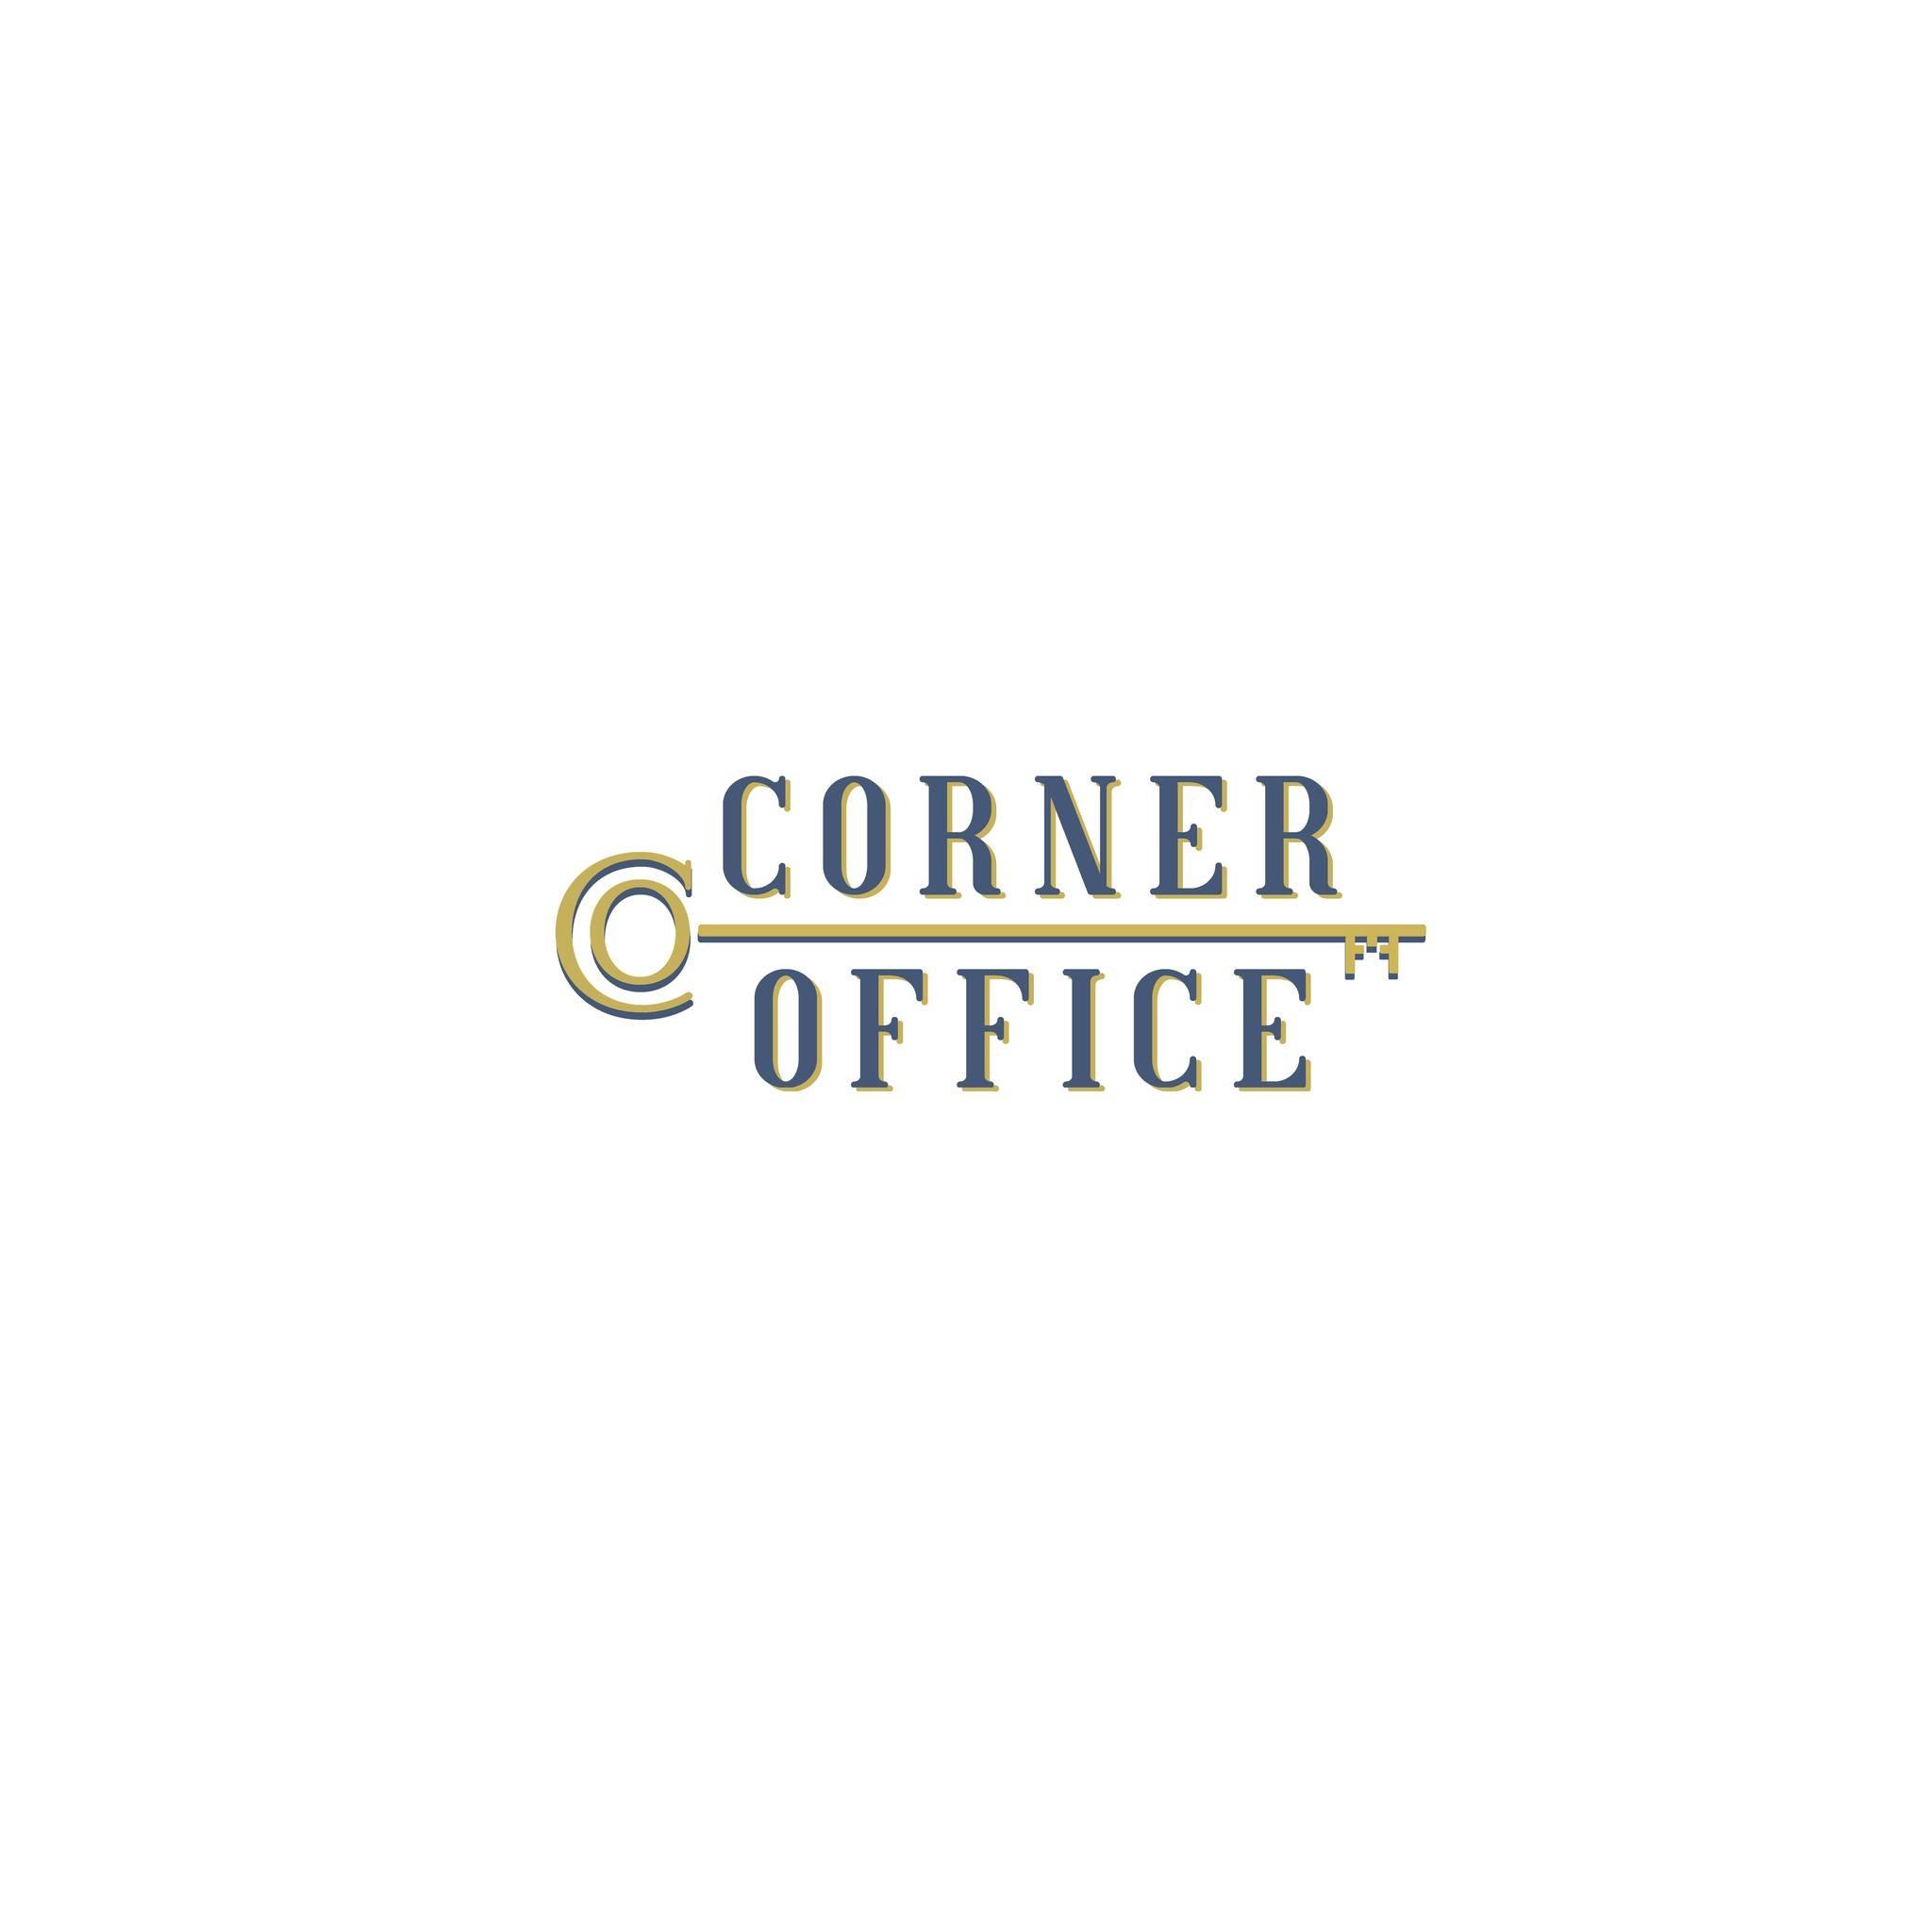 Corner Office - Auburn, AL 36832 - (334)649-7400 | ShowMeLocal.com